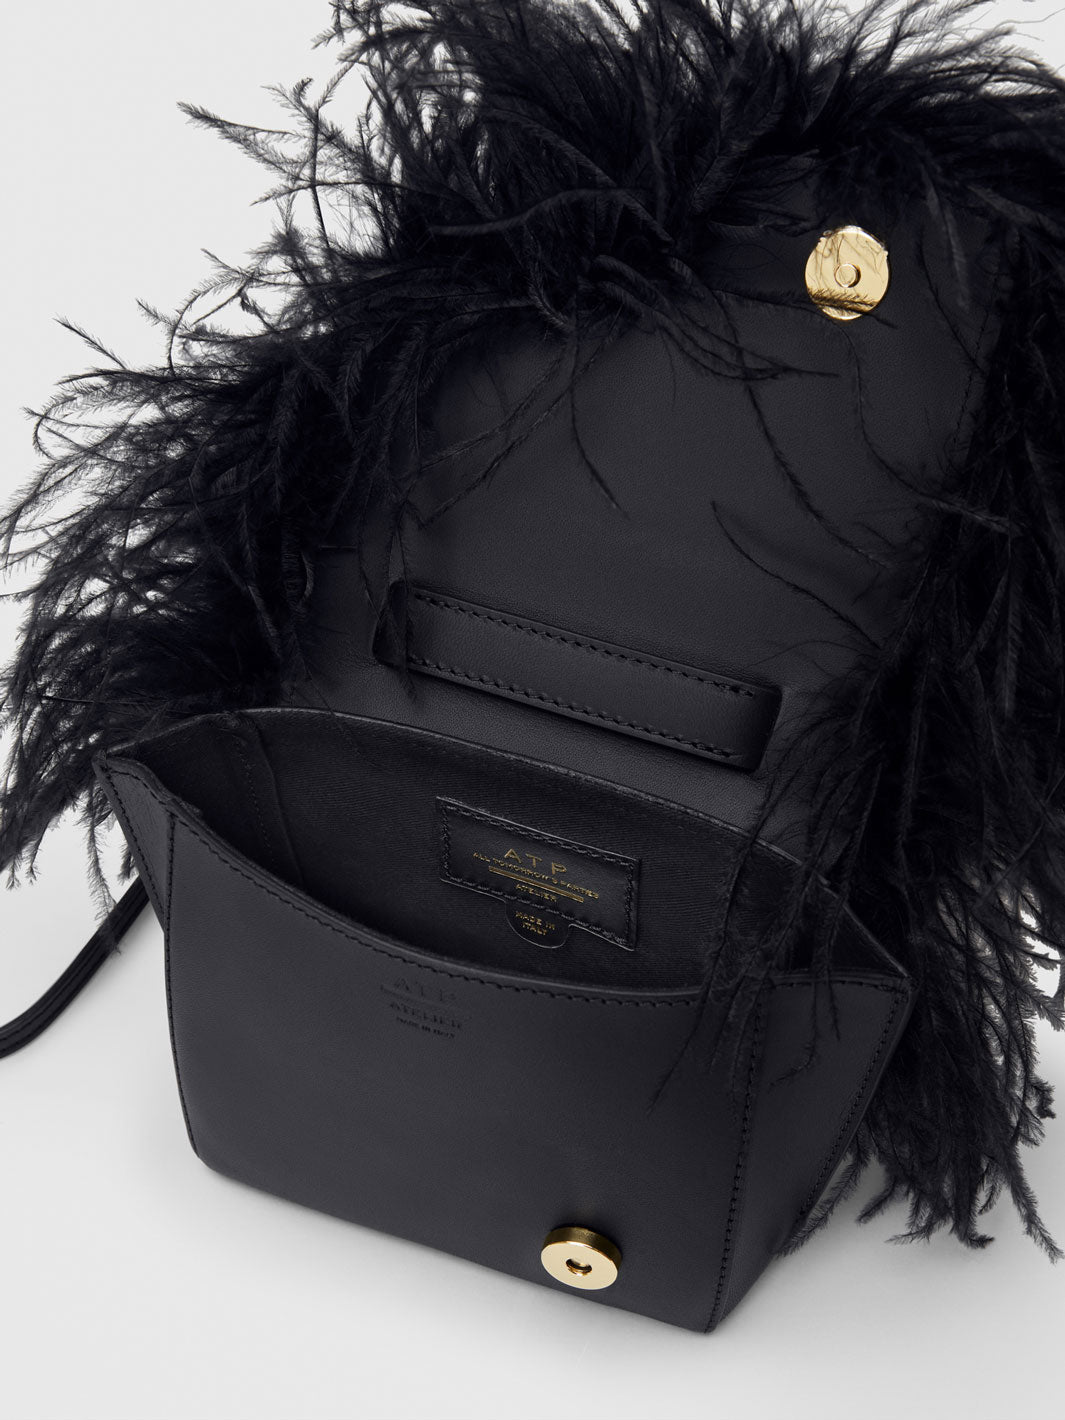 Montalcino Black Leather/Feathers Mini handbag